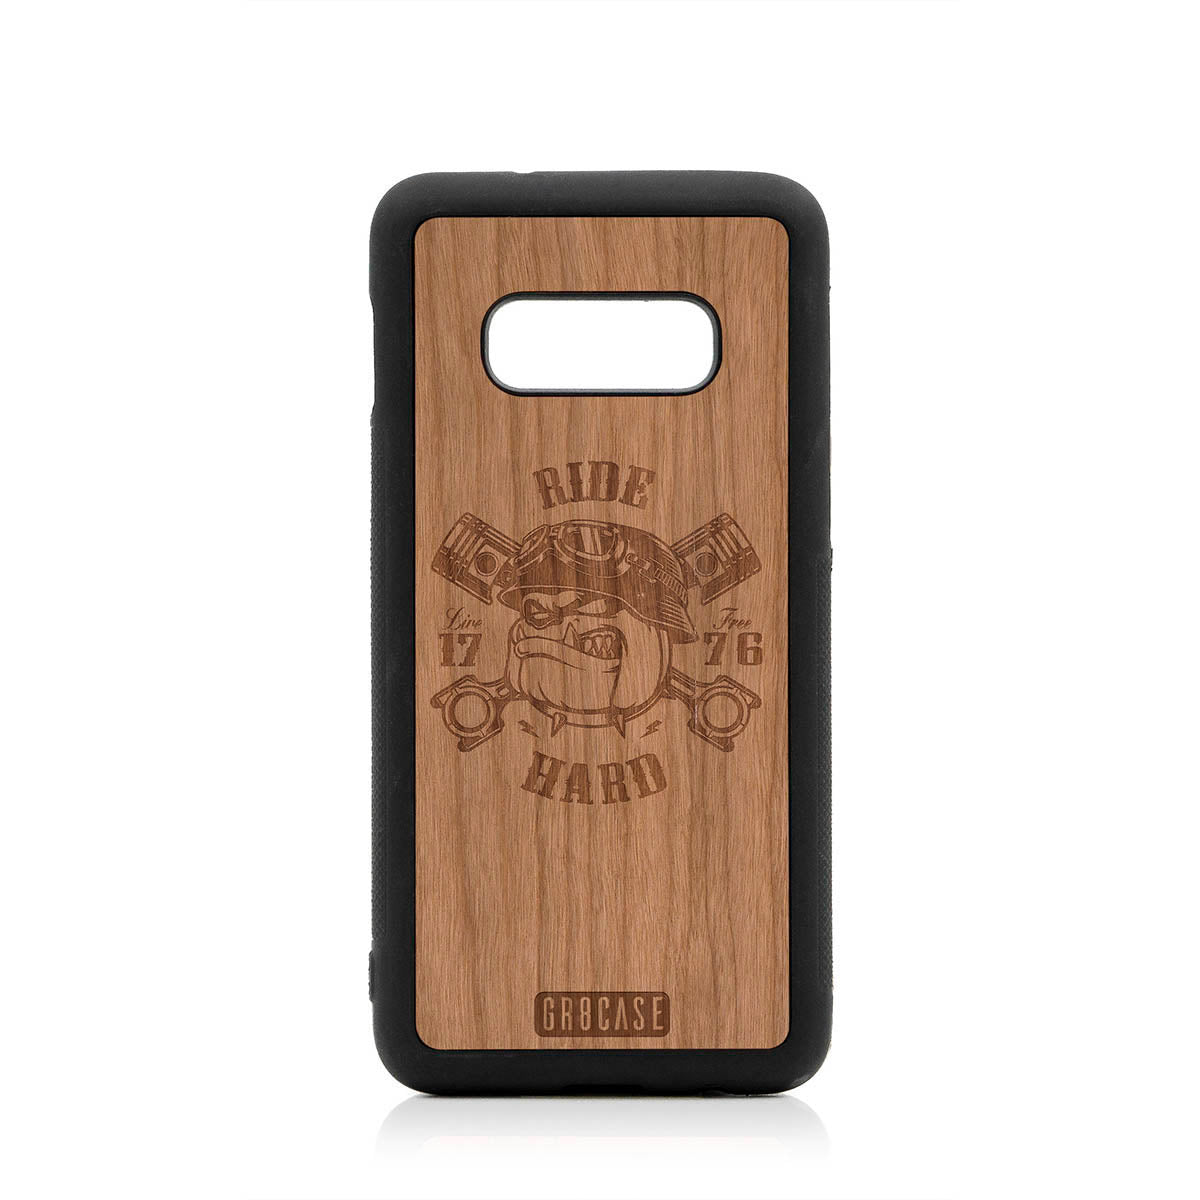 Ride Hard Live Free (Biker Dog) Design Wood Case For Samsung Galaxy S10E by GR8CASE